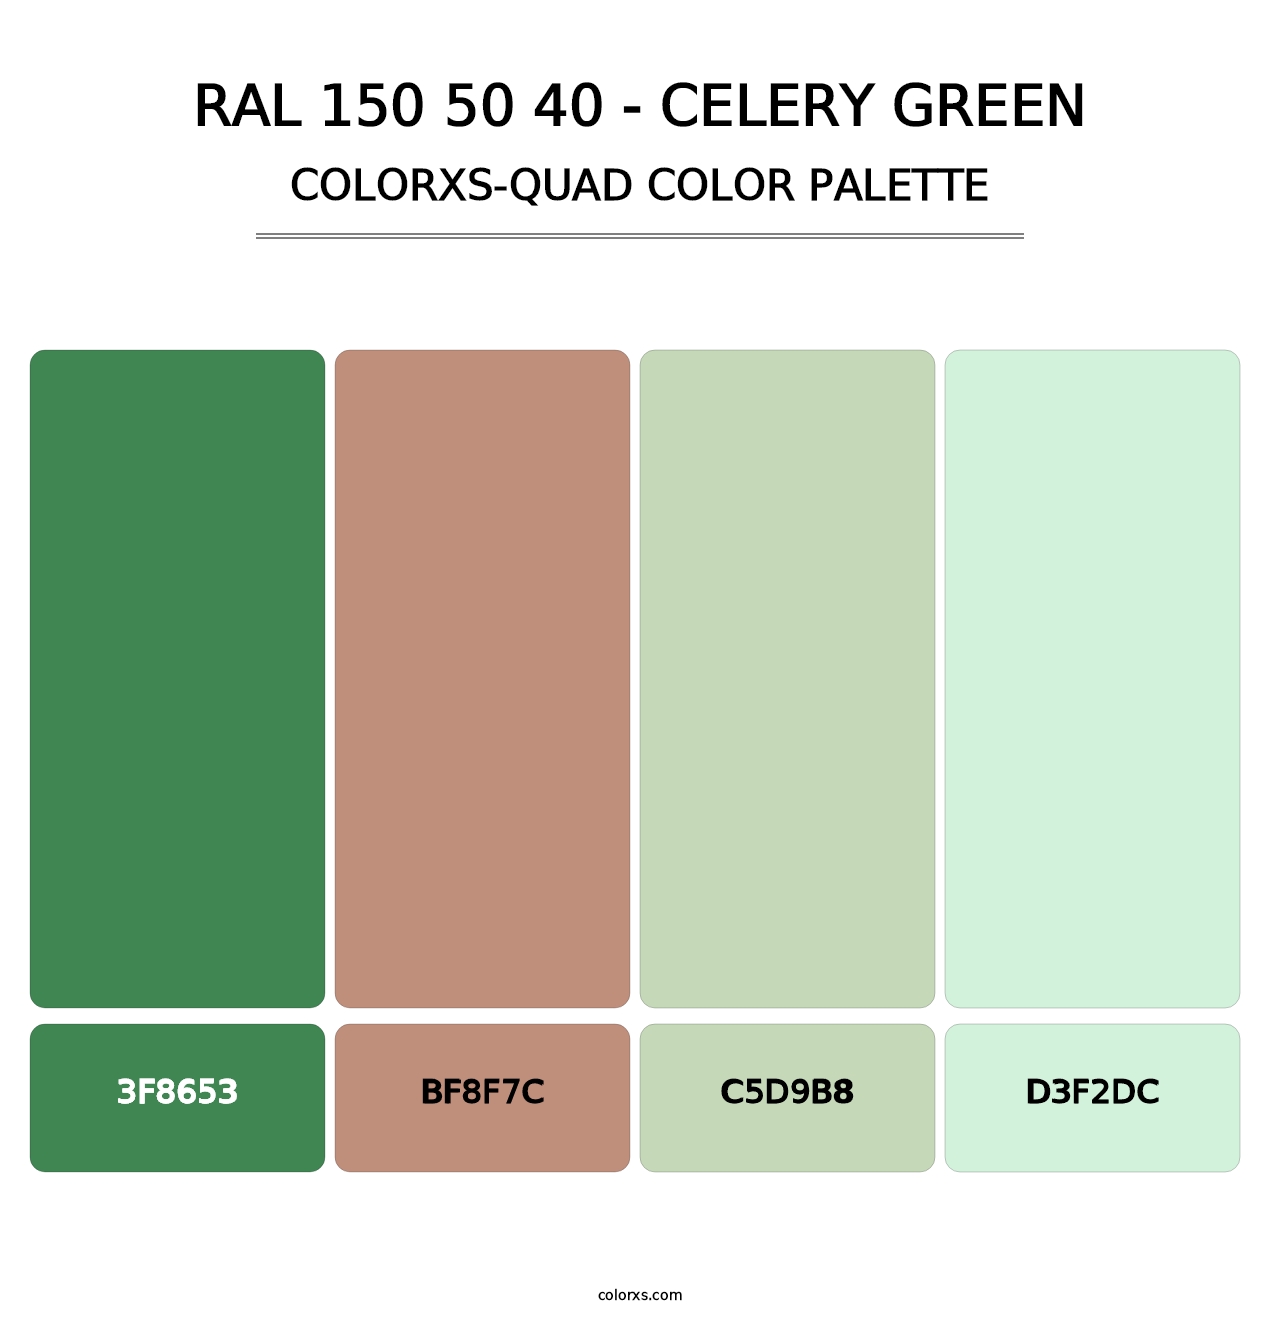 RAL 150 50 40 - Celery Green - Colorxs Quad Palette